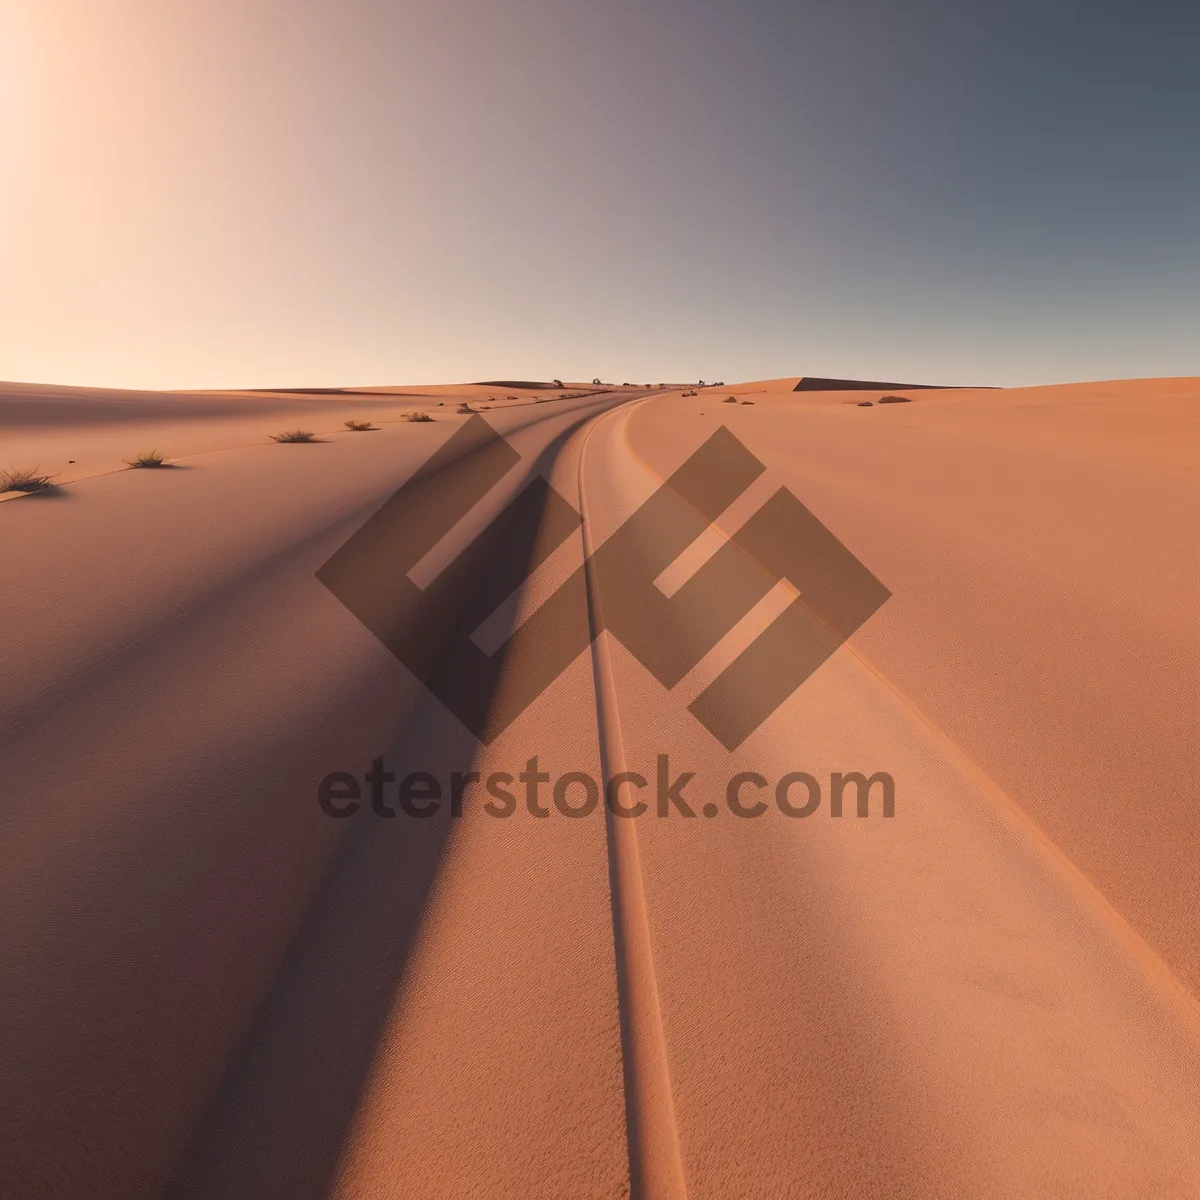 Picture of Dune Desert Landscape Road under Sunny Sky